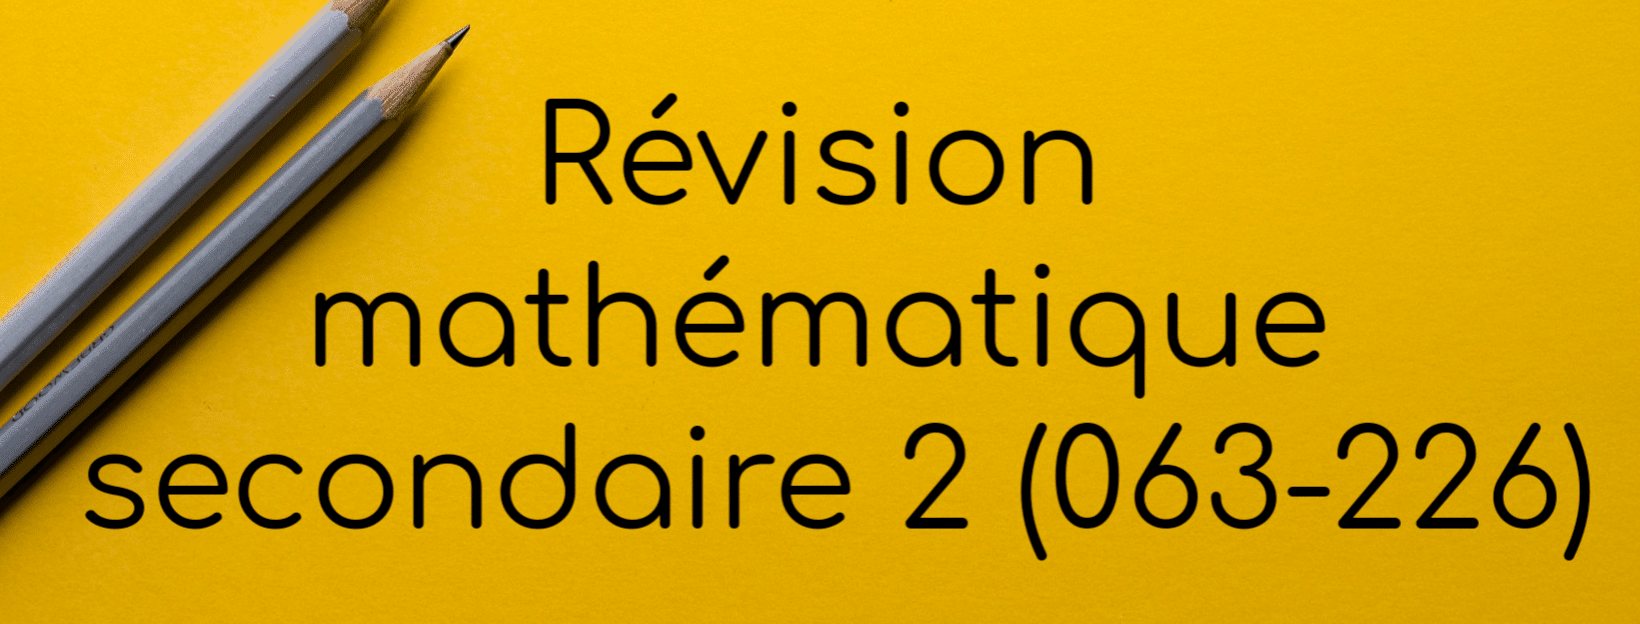 Révision mathématique secondaire 2 (063-226). Secondary 2 Mathematics Review (063-226). SOSprof. SOSteacher